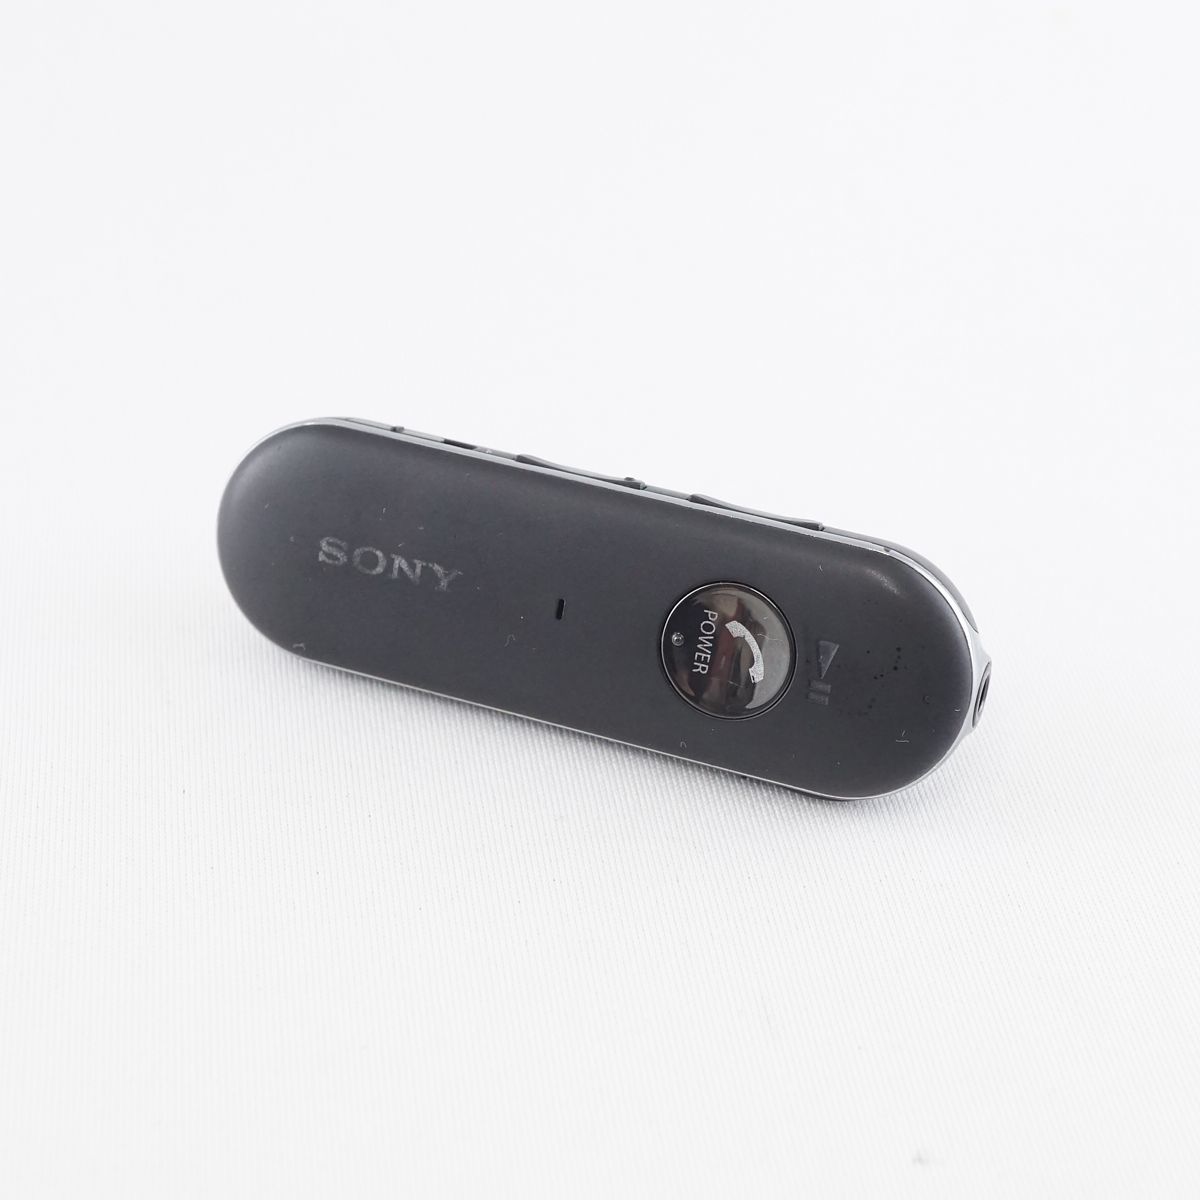 SONY MDR-EX31BN ノイズキャンセリングイヤホン USED品 本体のみ ワイヤレスイヤホン クリップ NFC マイク ソニー ブラック 完動品 V0035の画像1